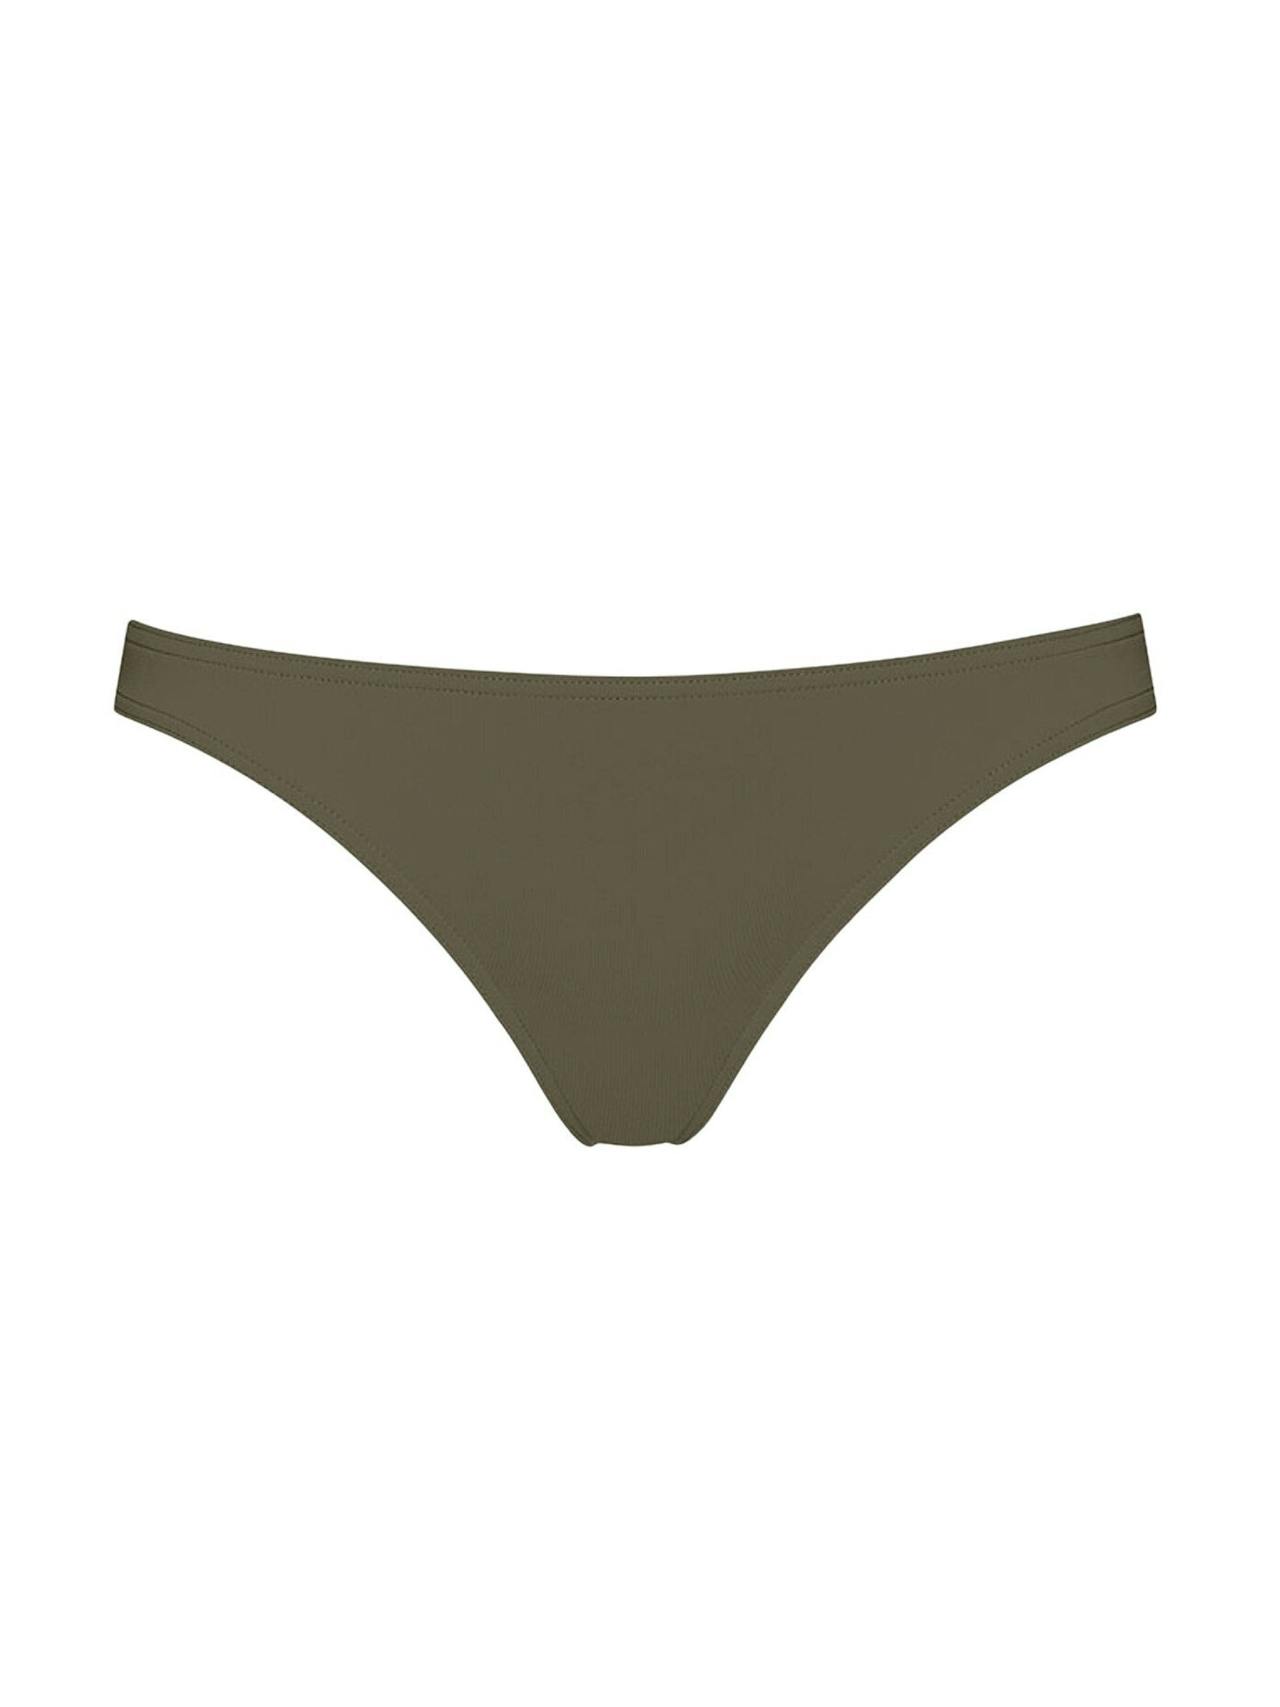 Fripon bikini bottom